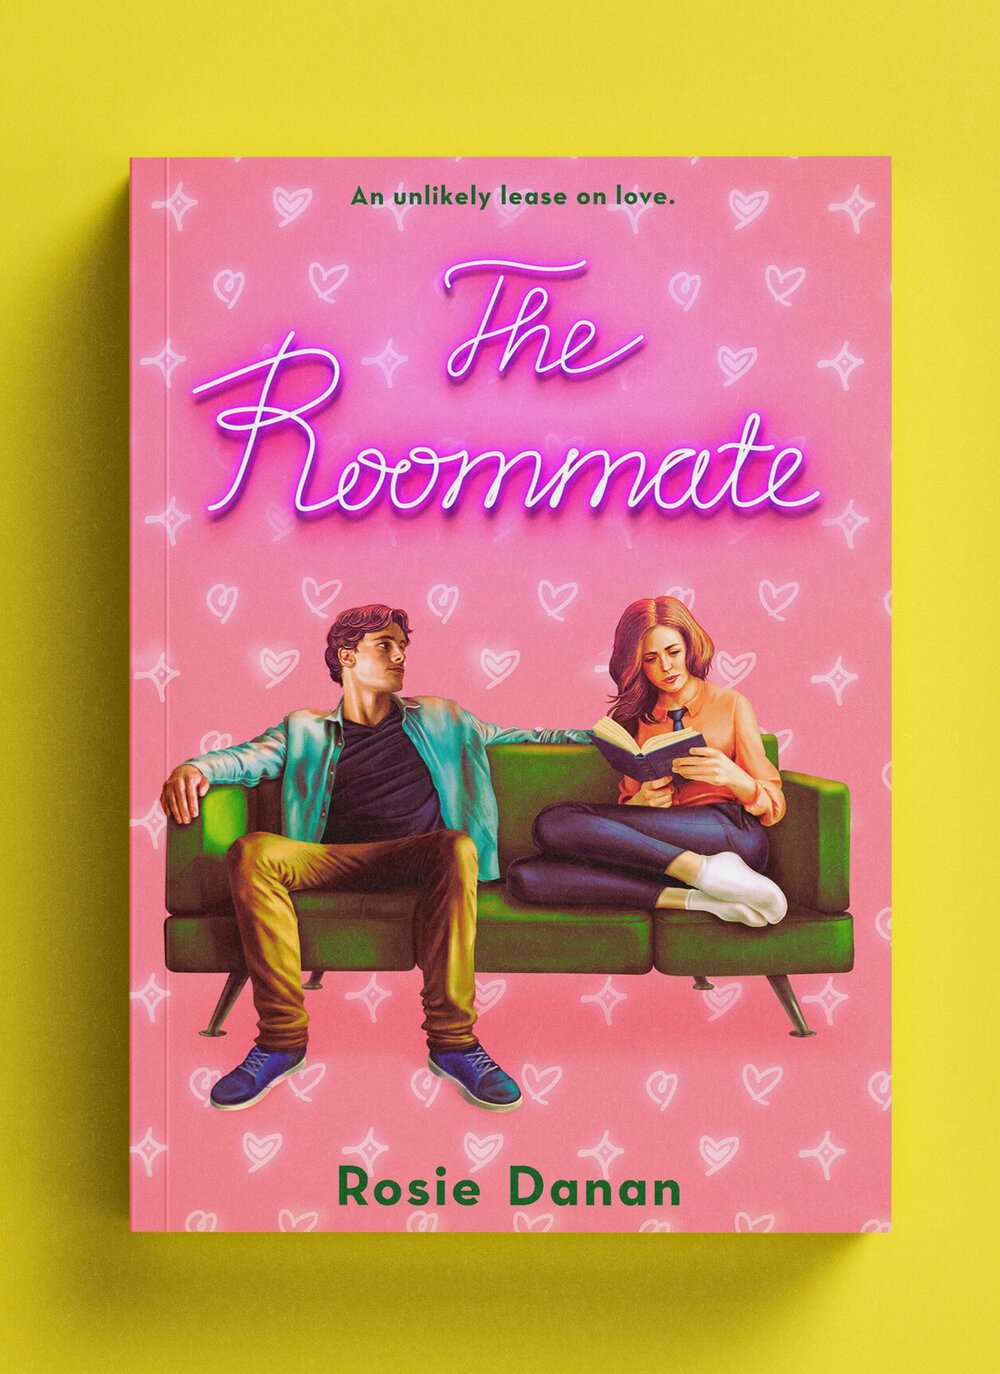 En este momento estás viendo » Descargar: The Roommate – Rosie Dañan PDF ESPAÑOL GRATIS